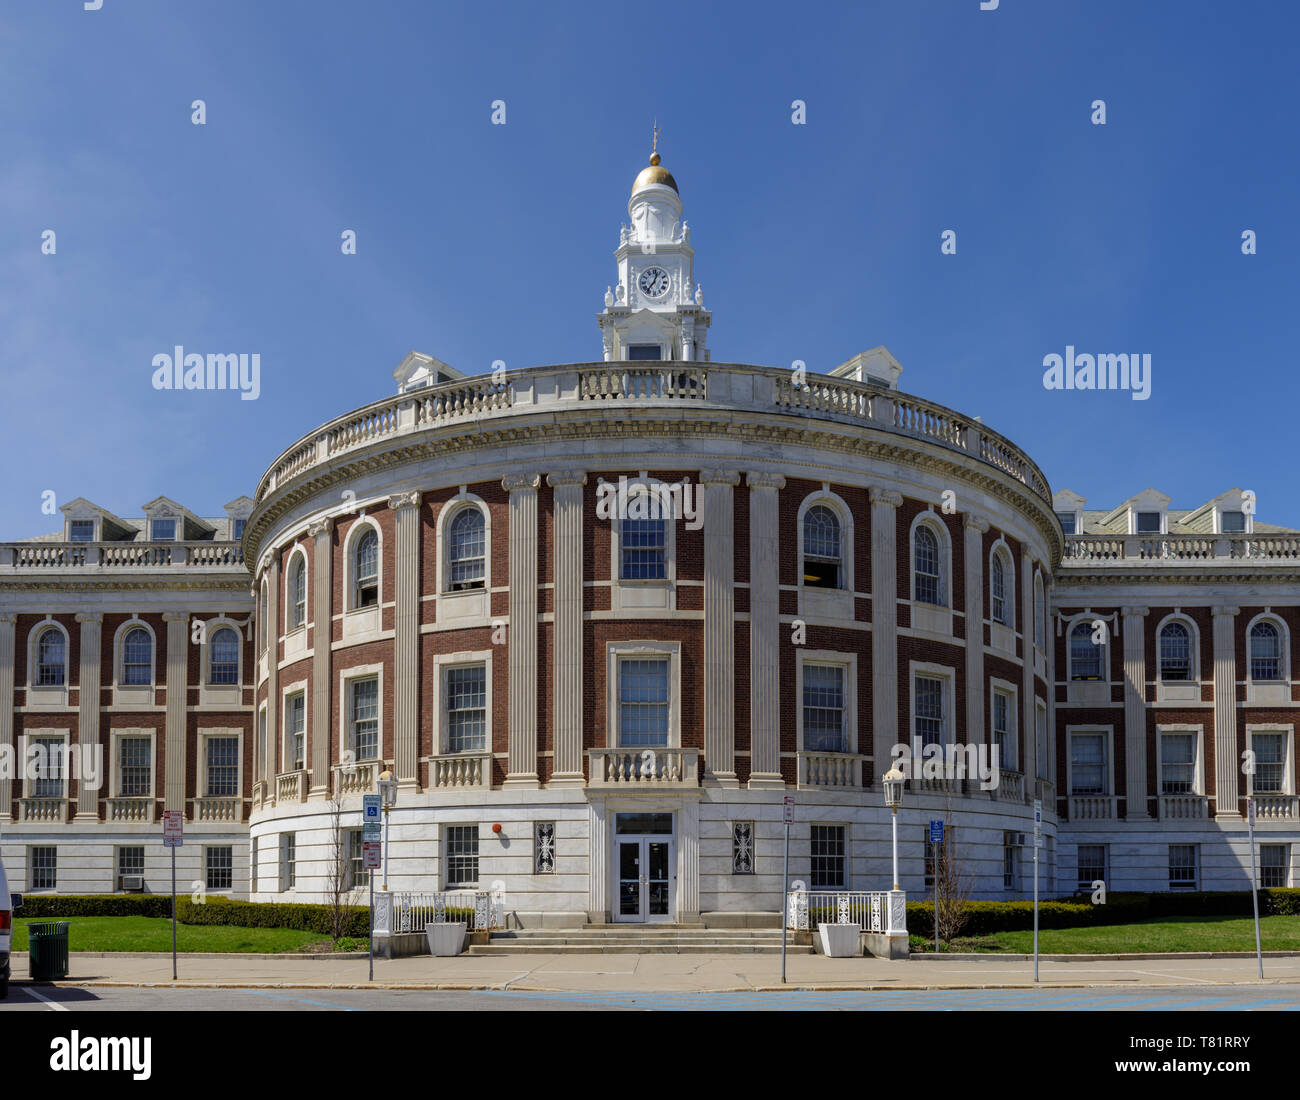 City Hall of Schenectady, New York, USA. Stock Photo